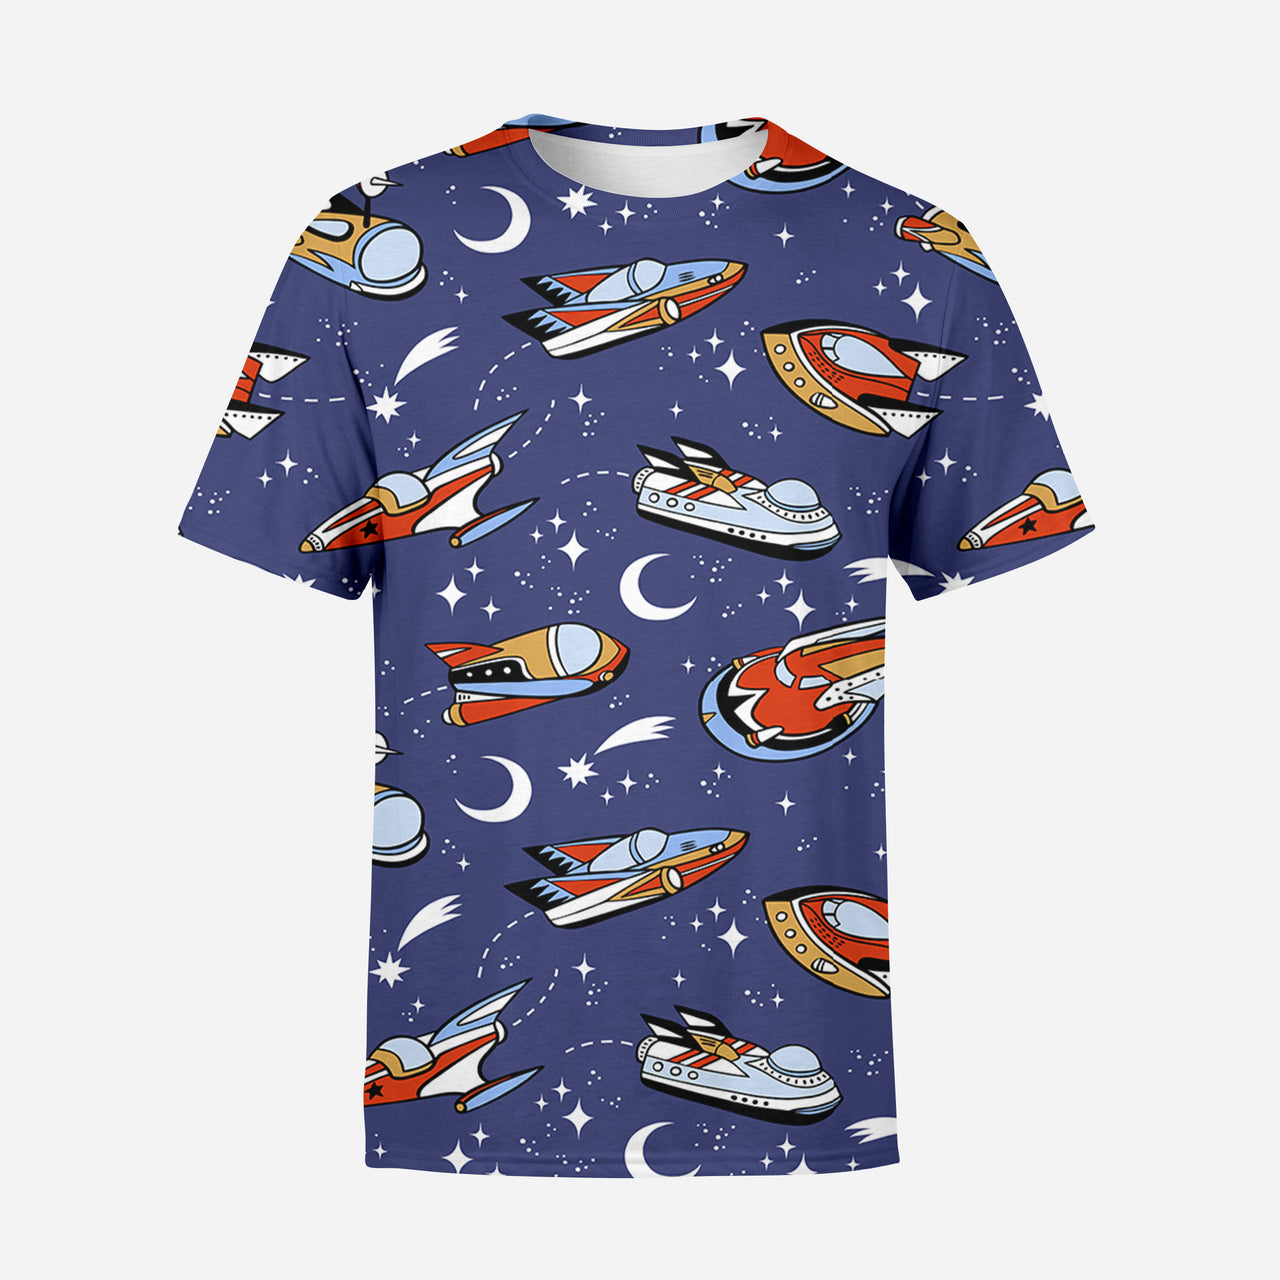 Spaceship & Stars Designed 3D T-Shirts